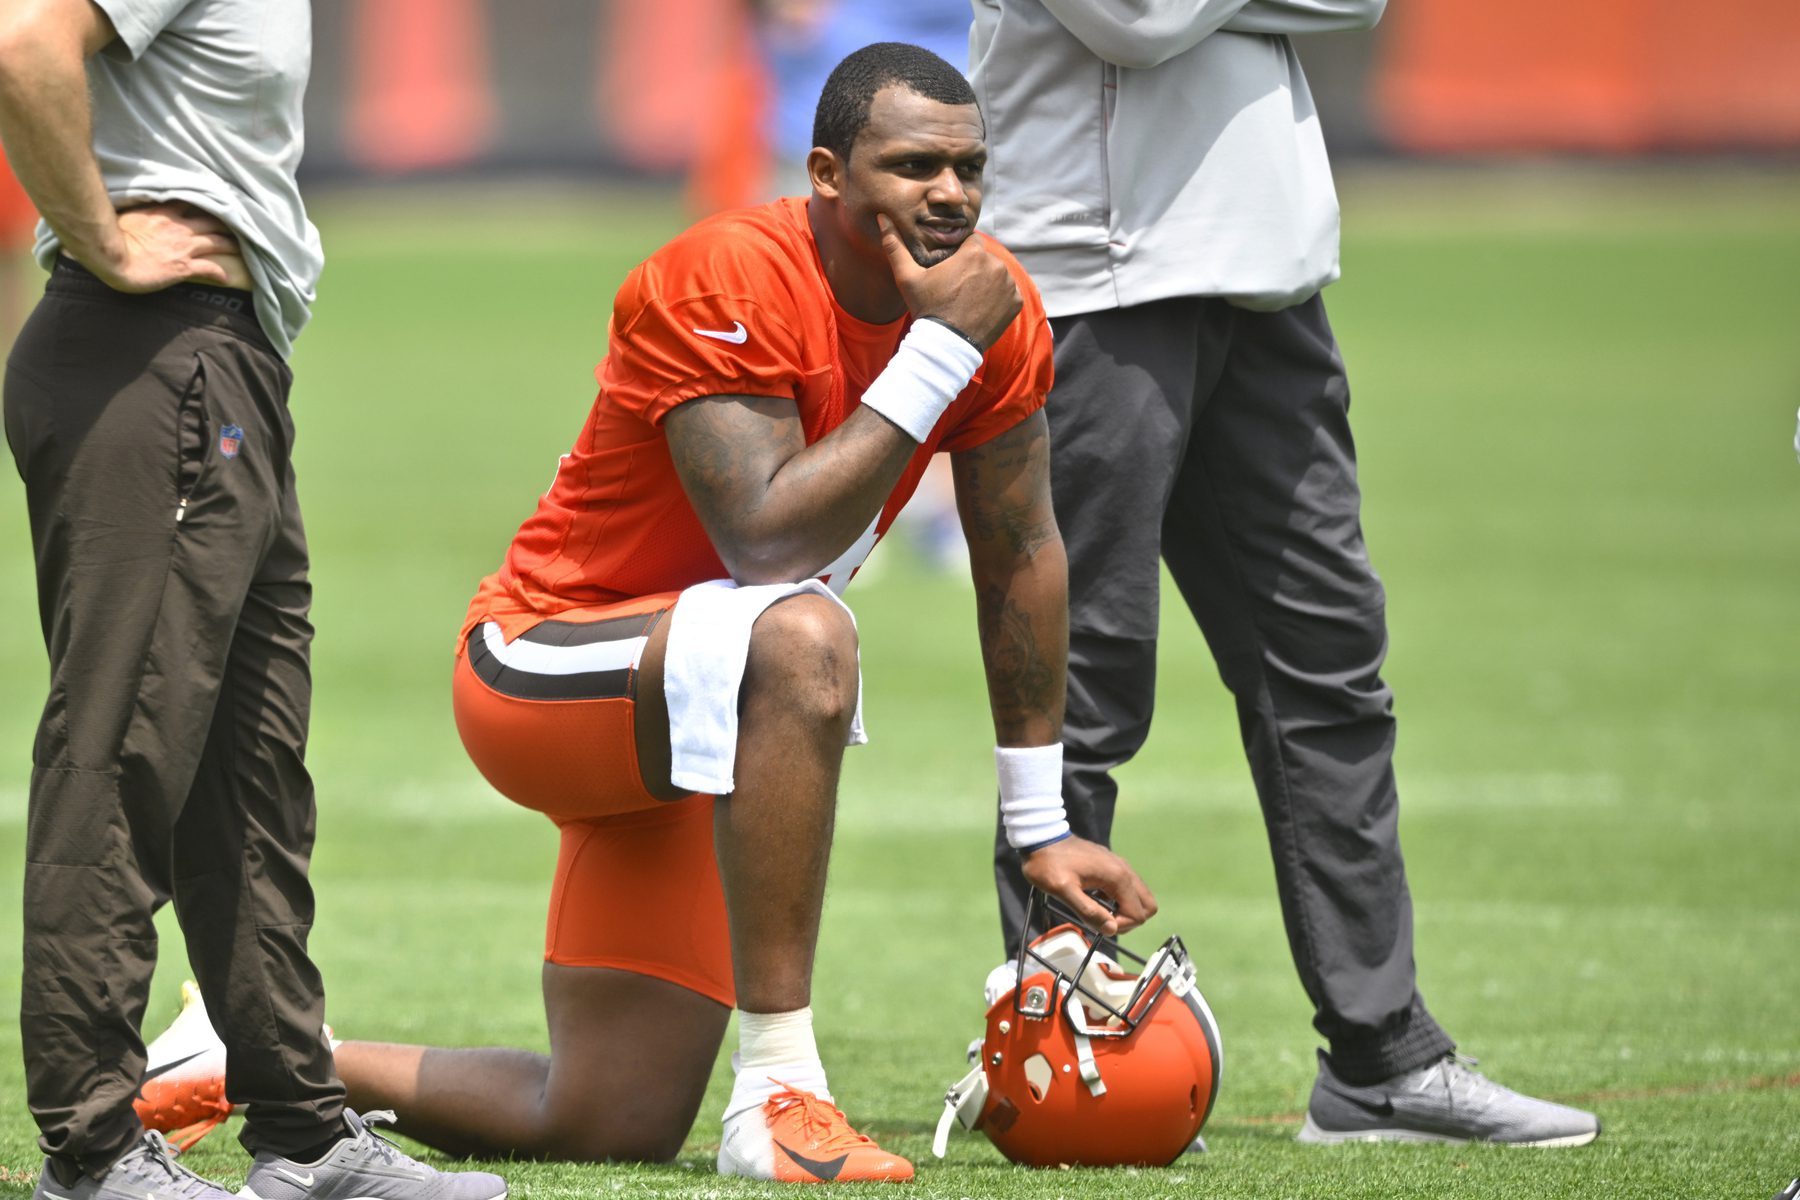 Cleveland Browns quarterback Deshaun Watson kneels on a football field.